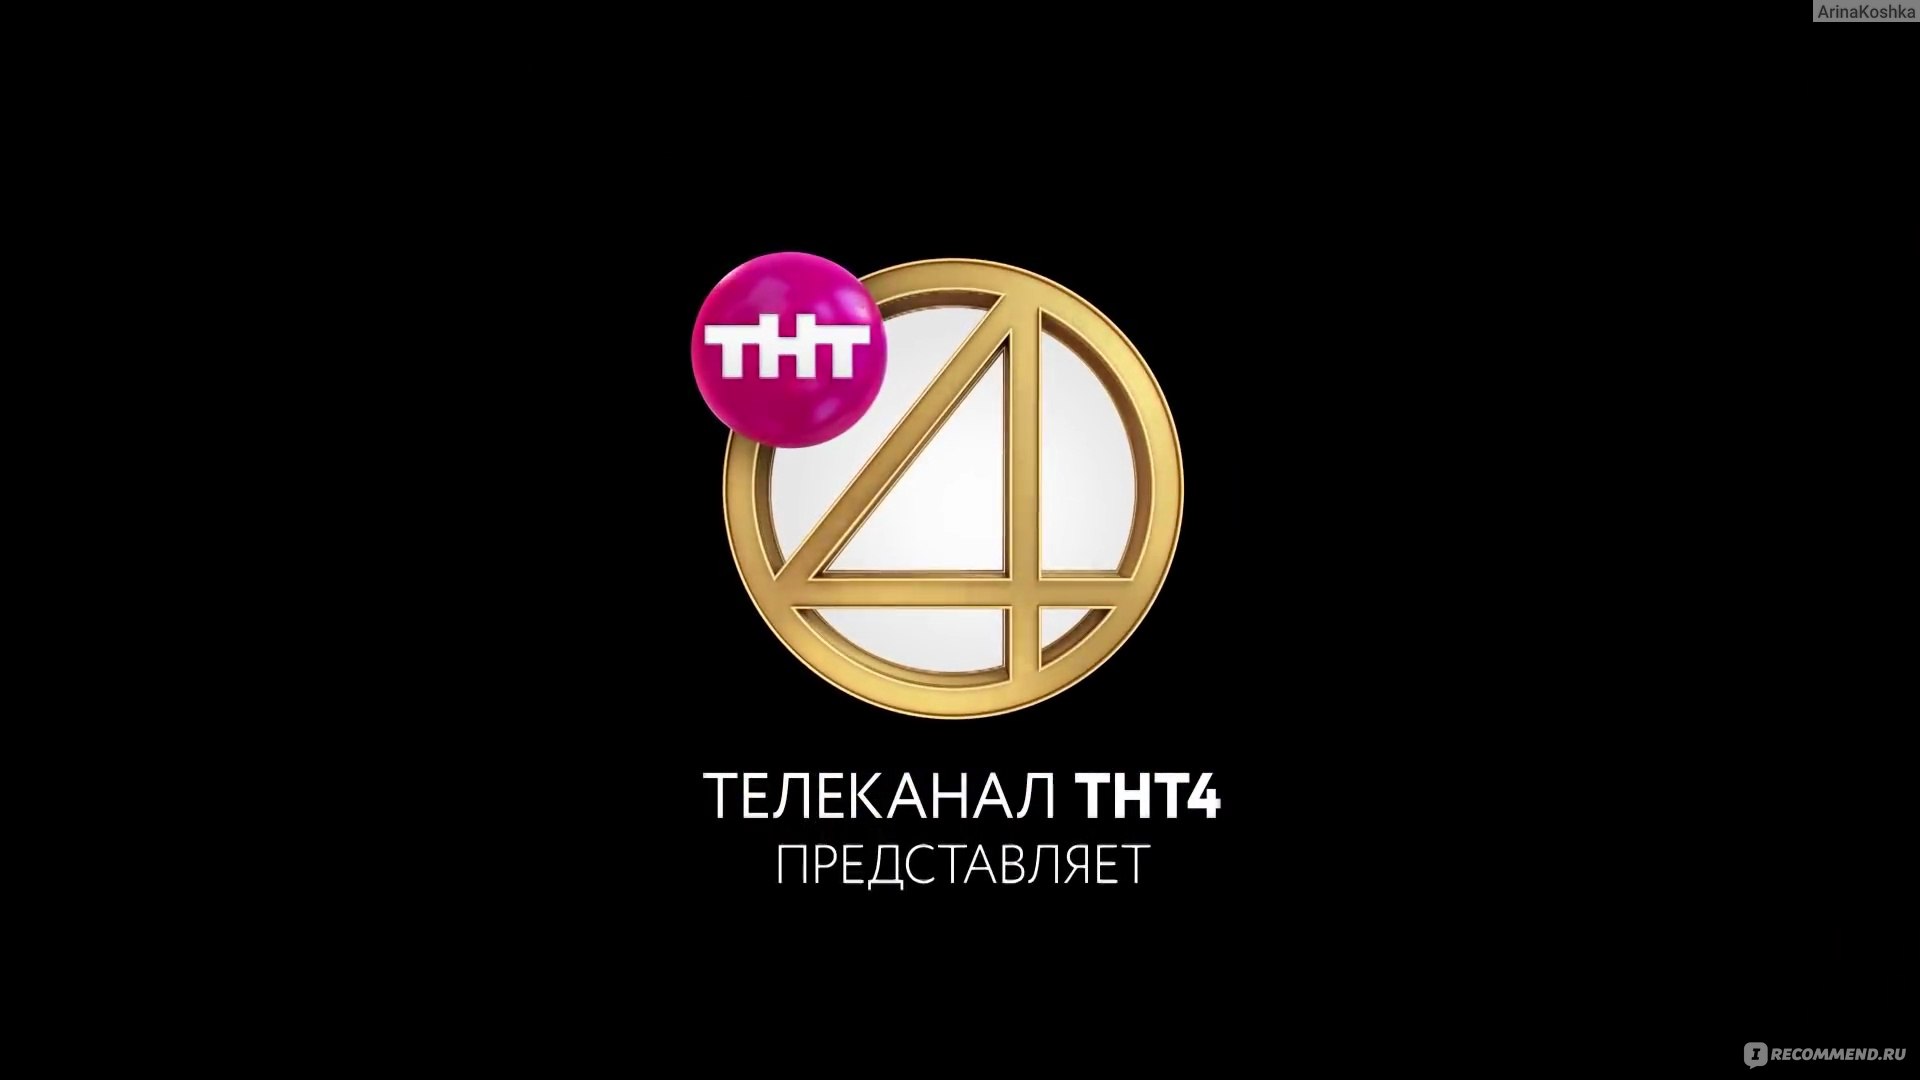 Эфире телеканал тнт 4. ТНТ 4. Телеканал ТНТ. ТНТ 4 реклама. Логотип канала ТНТ.